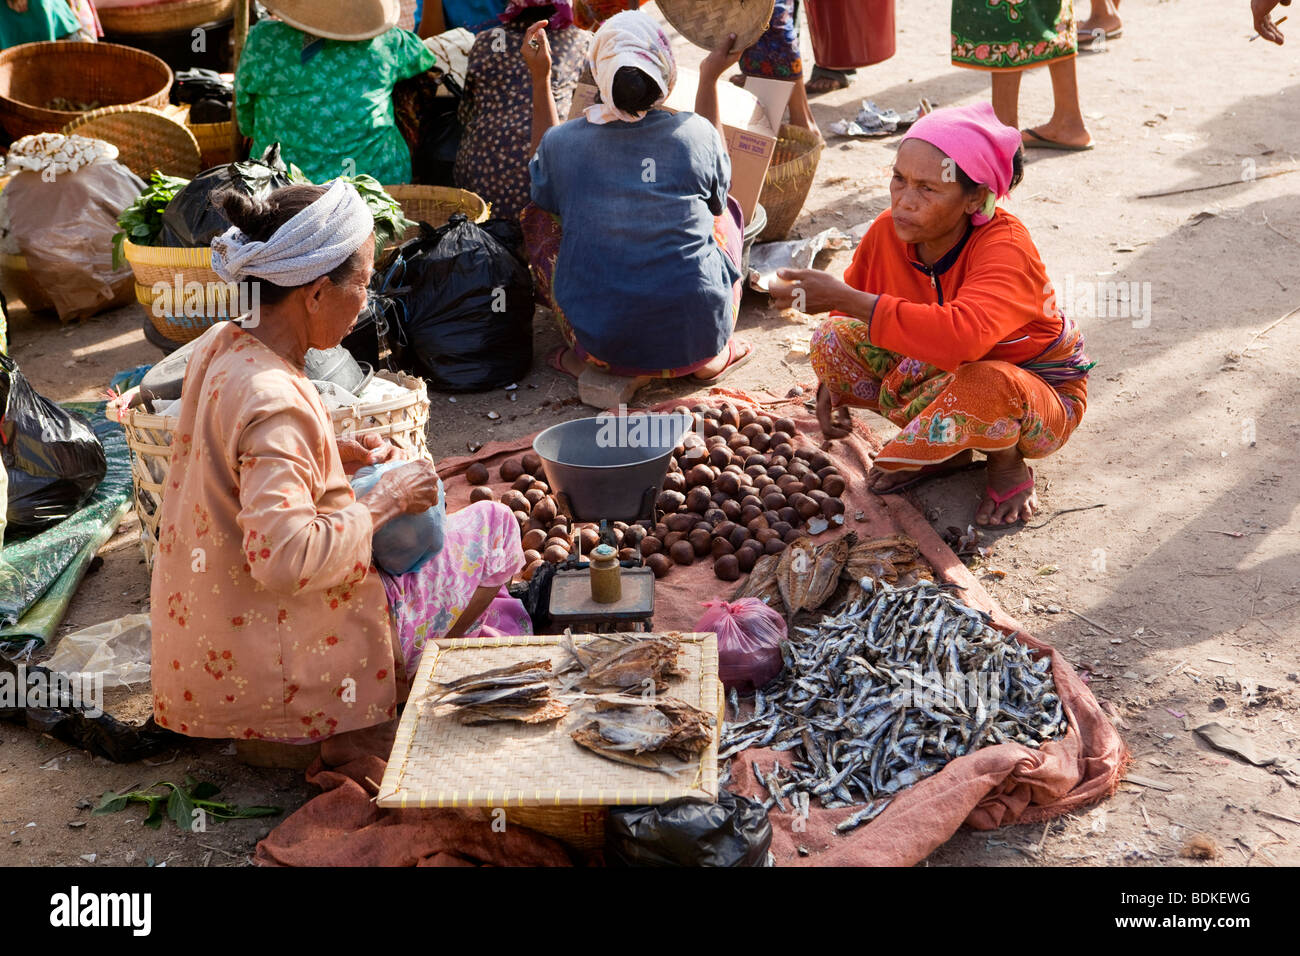 Indonesia, Lombok, Kuta, weekly market woman selling ikan bilis dried fish and salat snake fruit Stock Photo